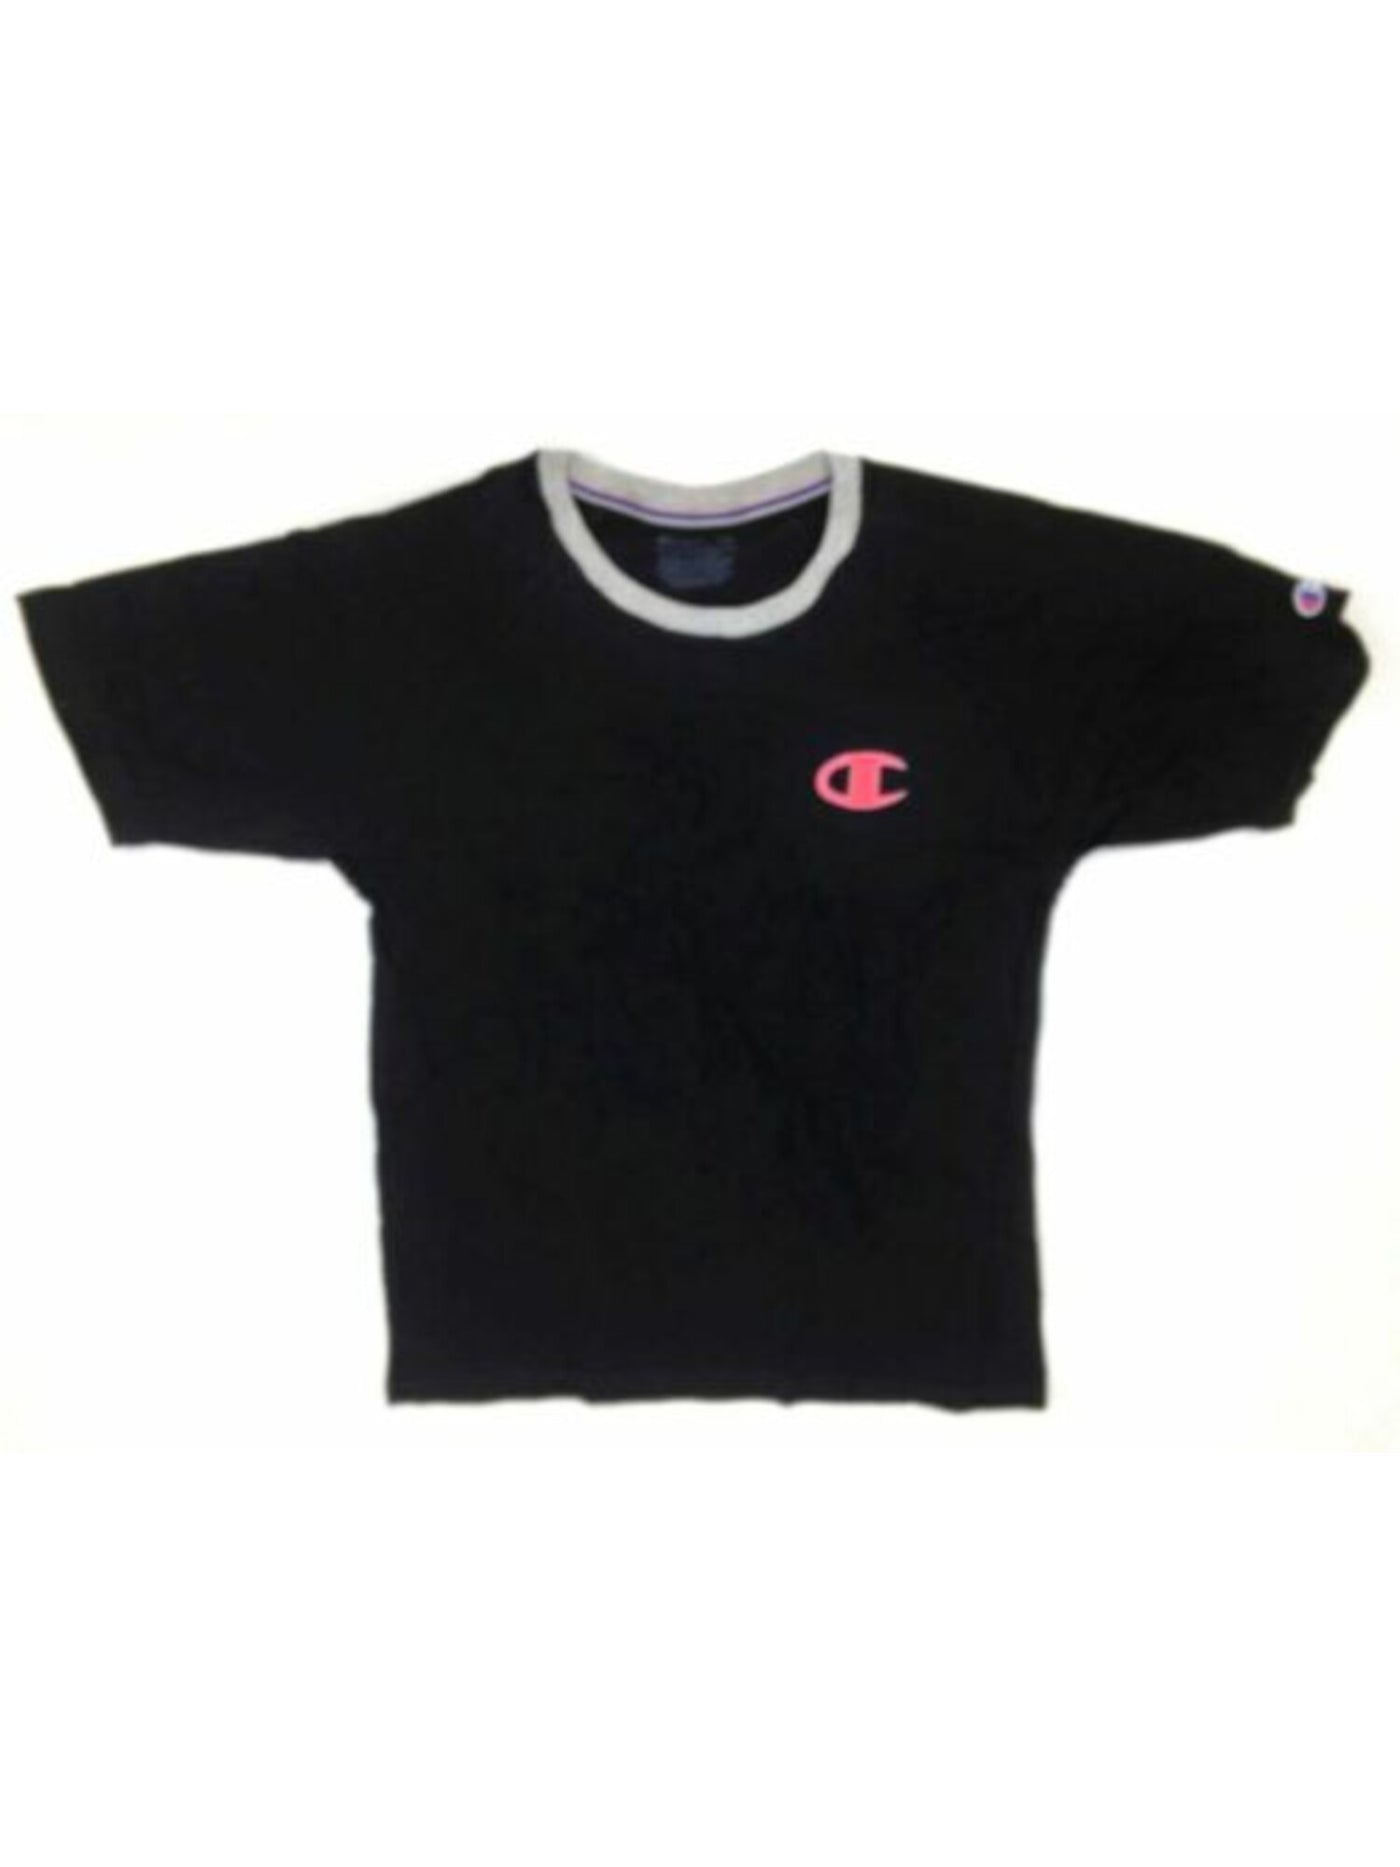 CHAMPION Mens Black Sleepwear T-Shirt Size: S